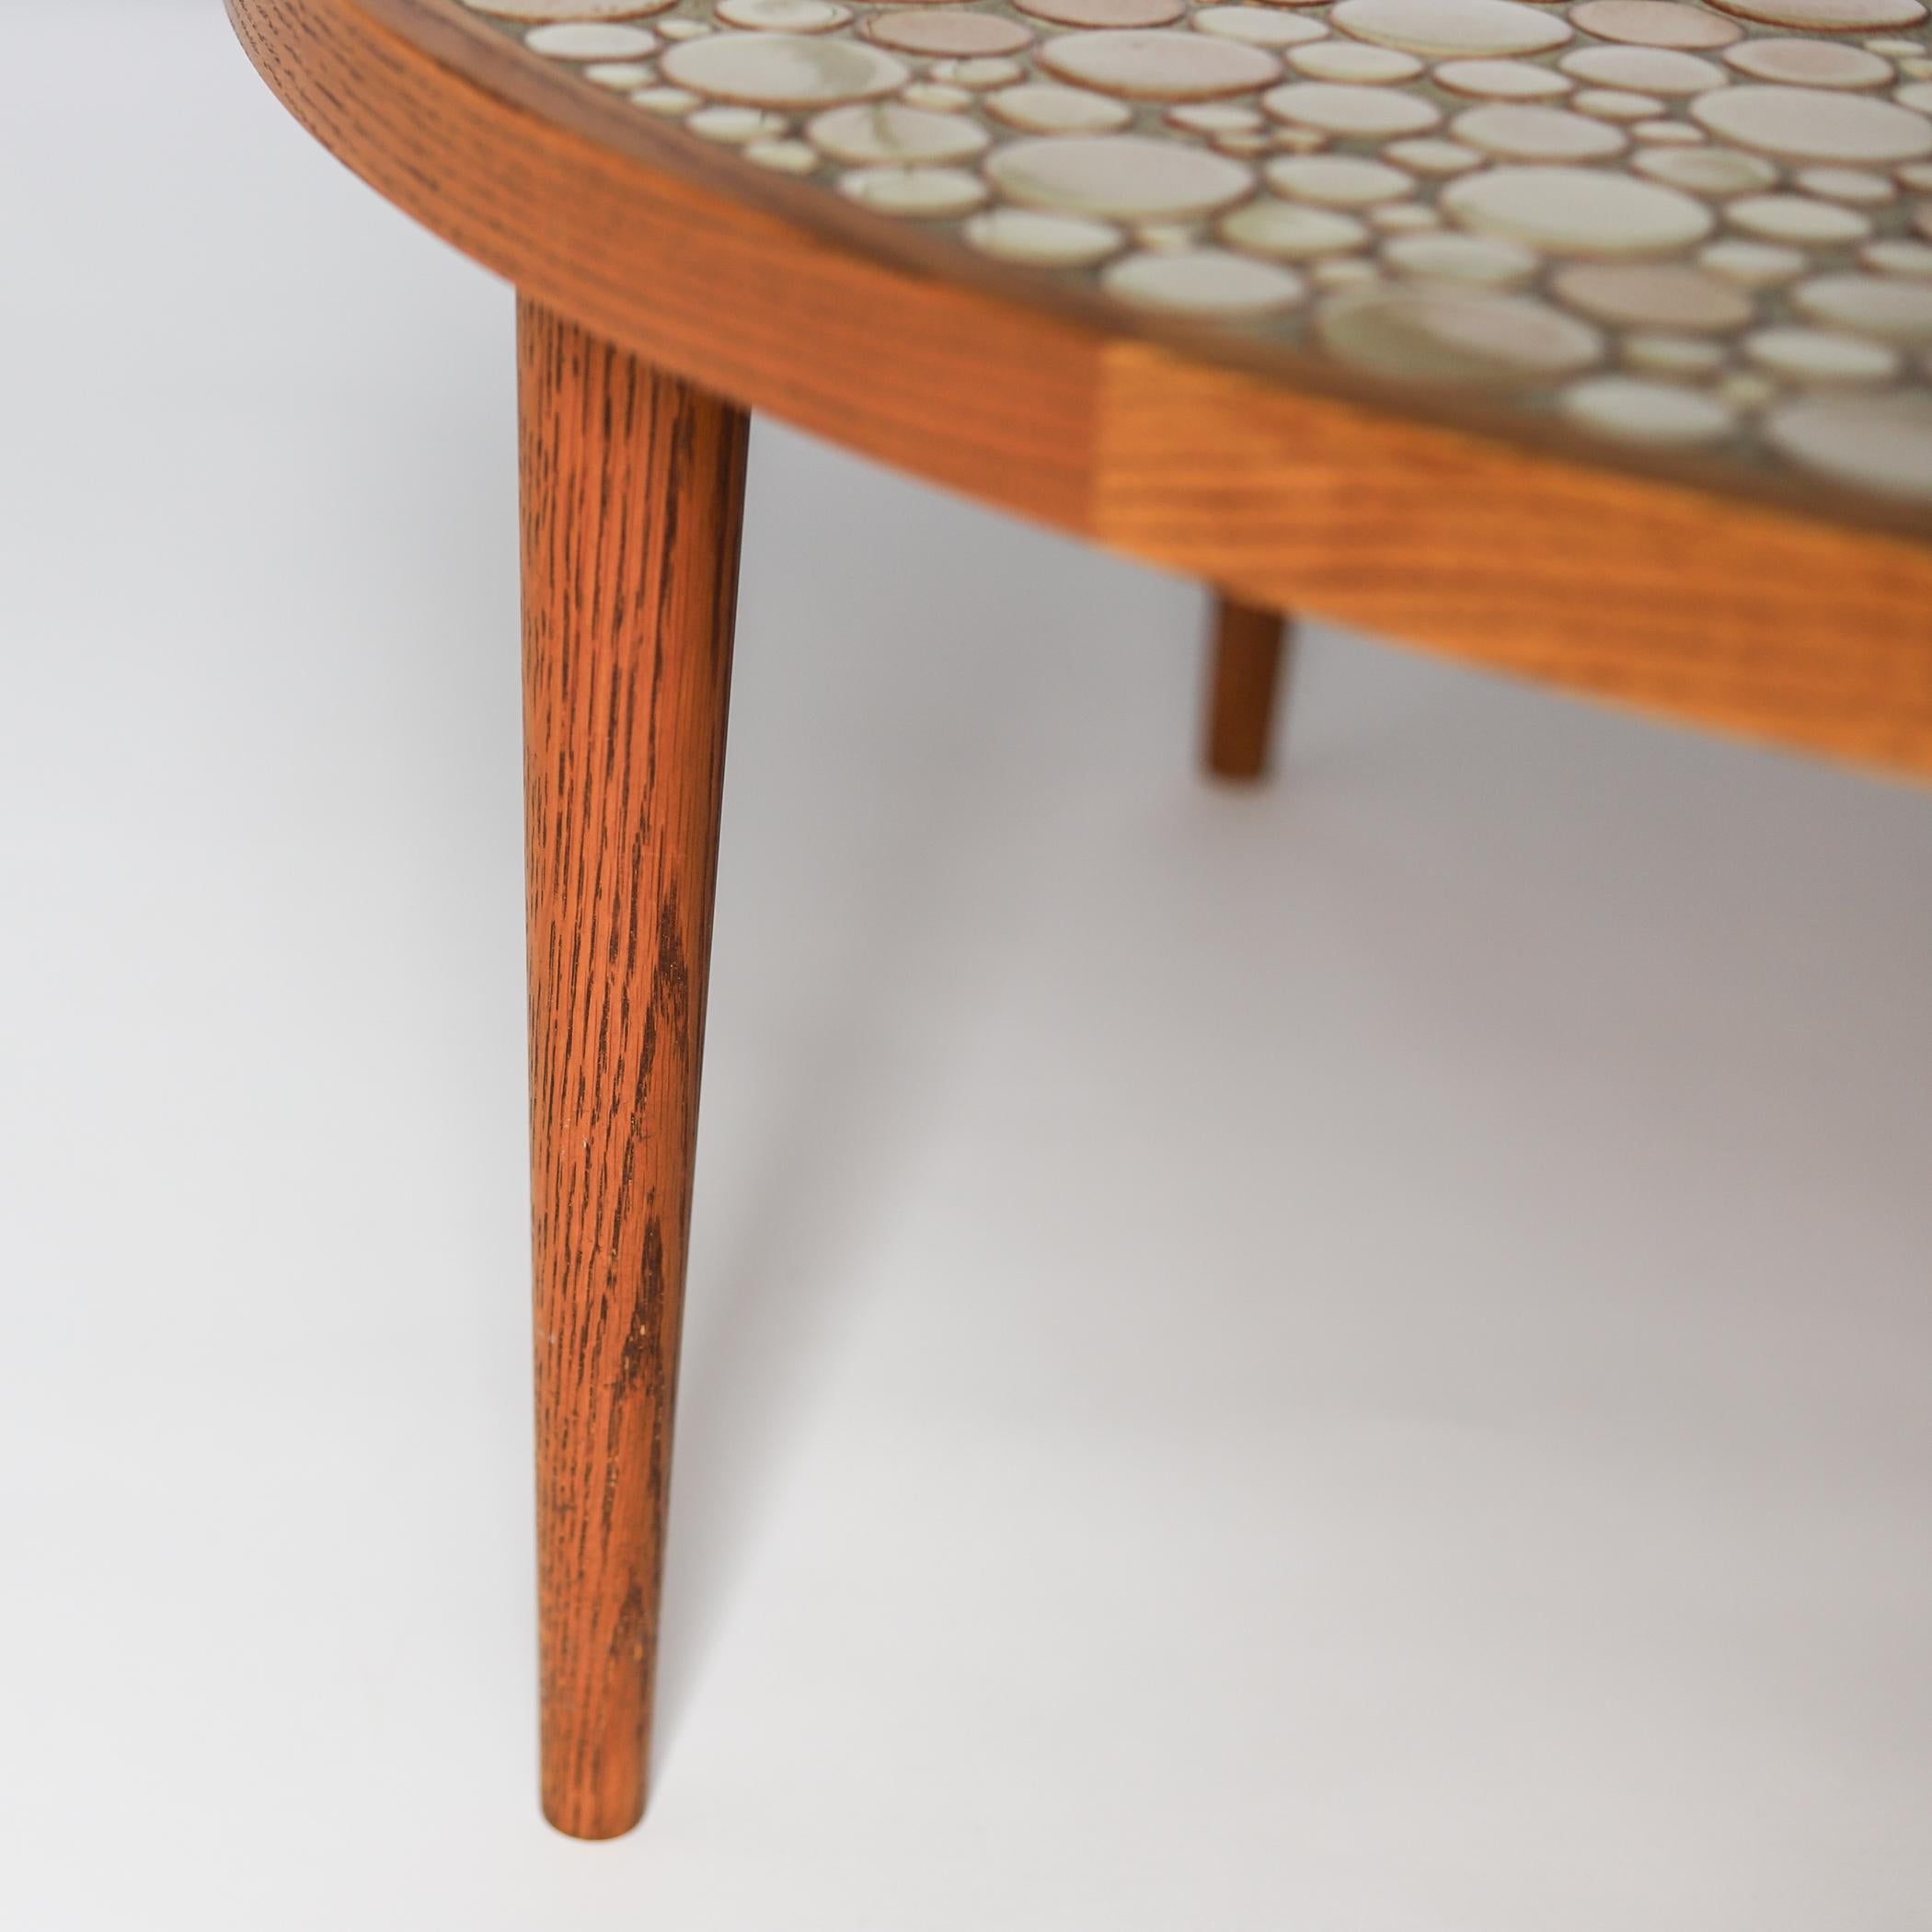 Mid-20th Century Martz Ceramic Tile Top Oak Coffee Table, Tan Circles, Marshall Studios For Sale